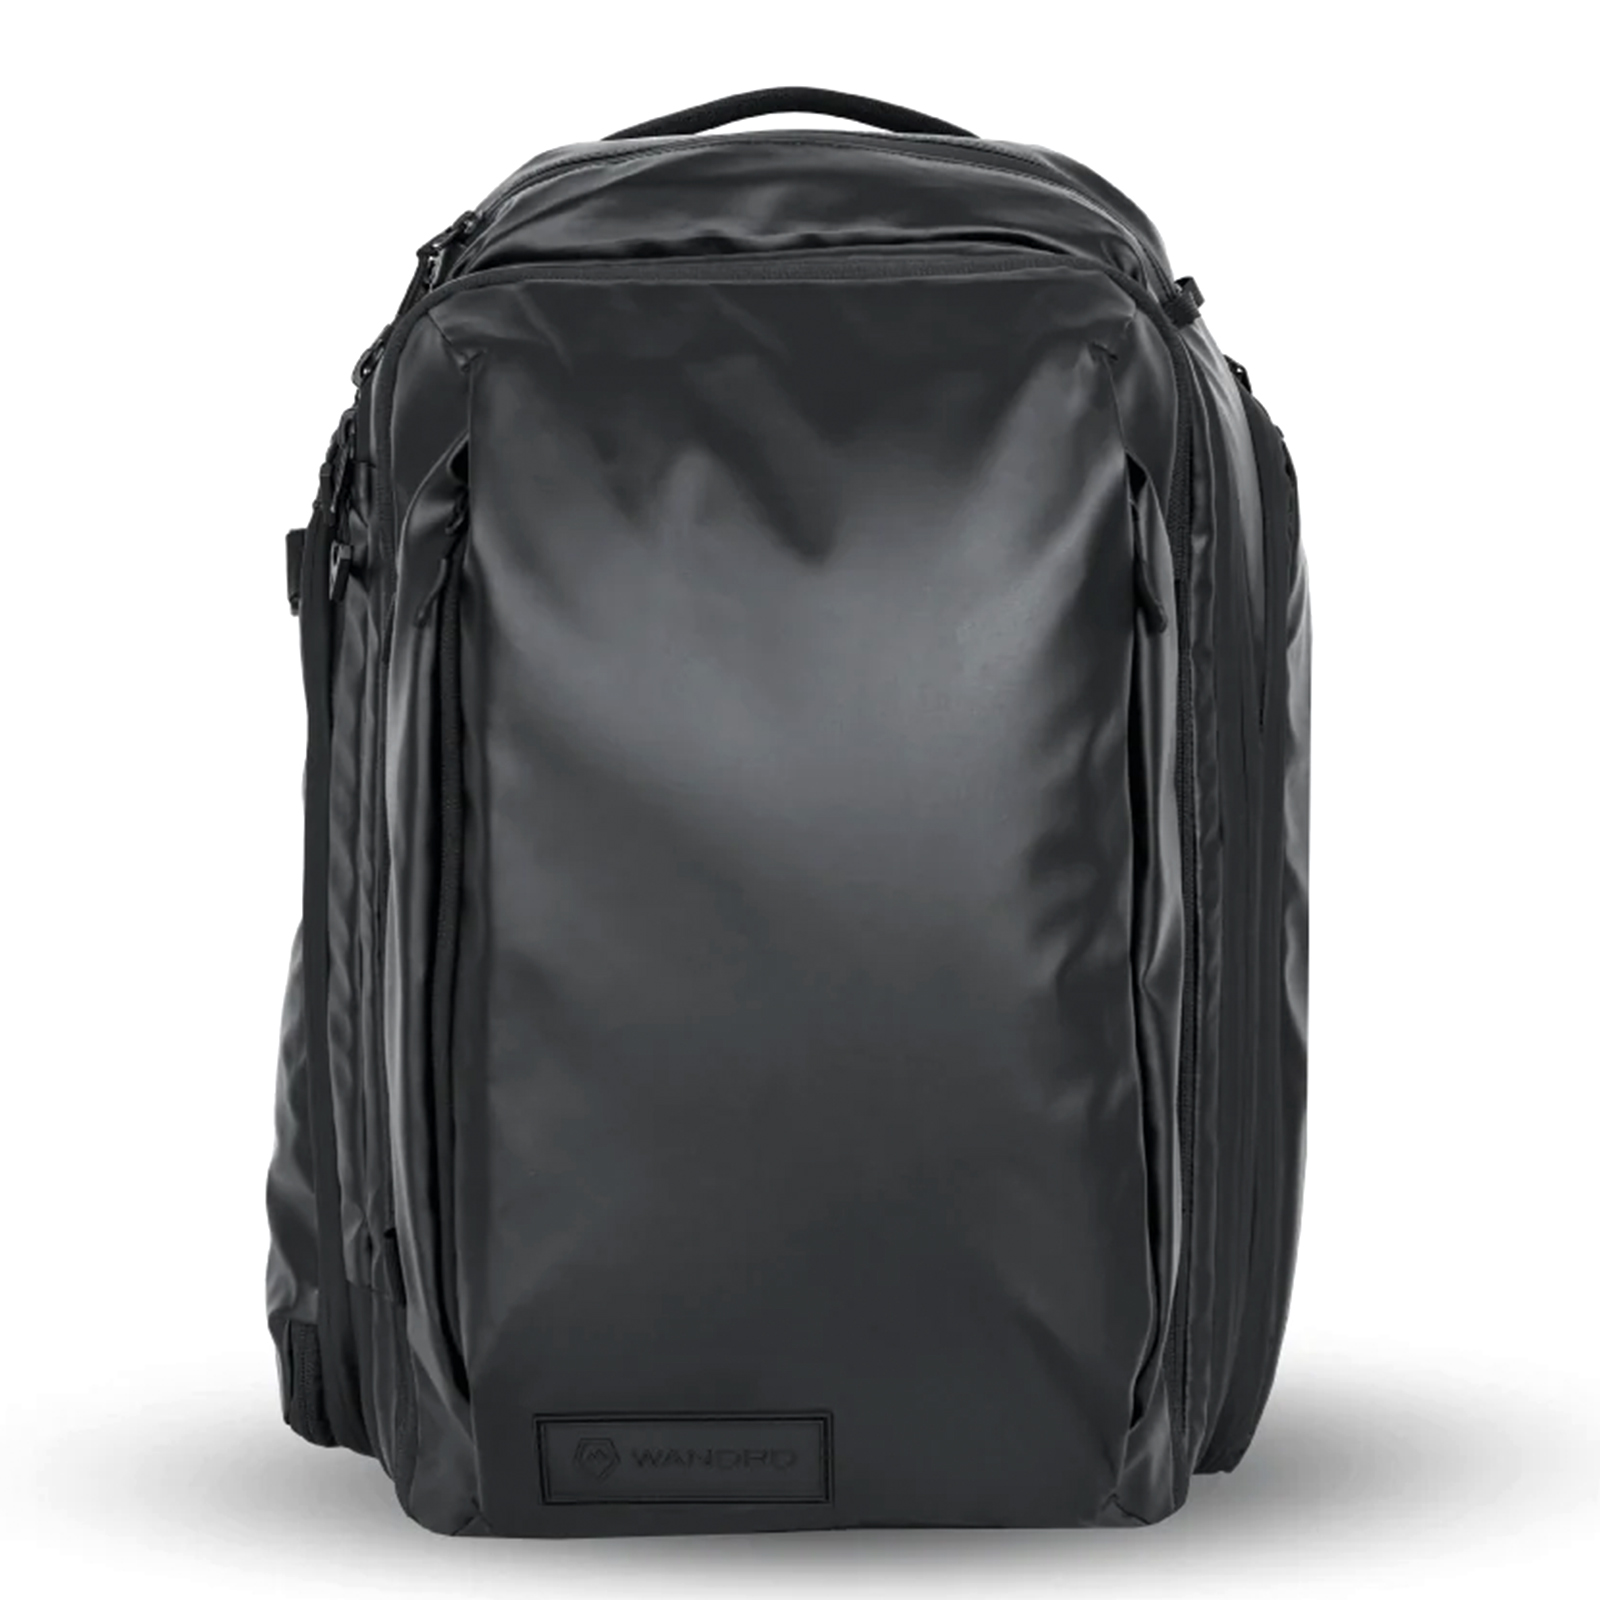 WANDRD Transit 35L Travel Backpack - Black